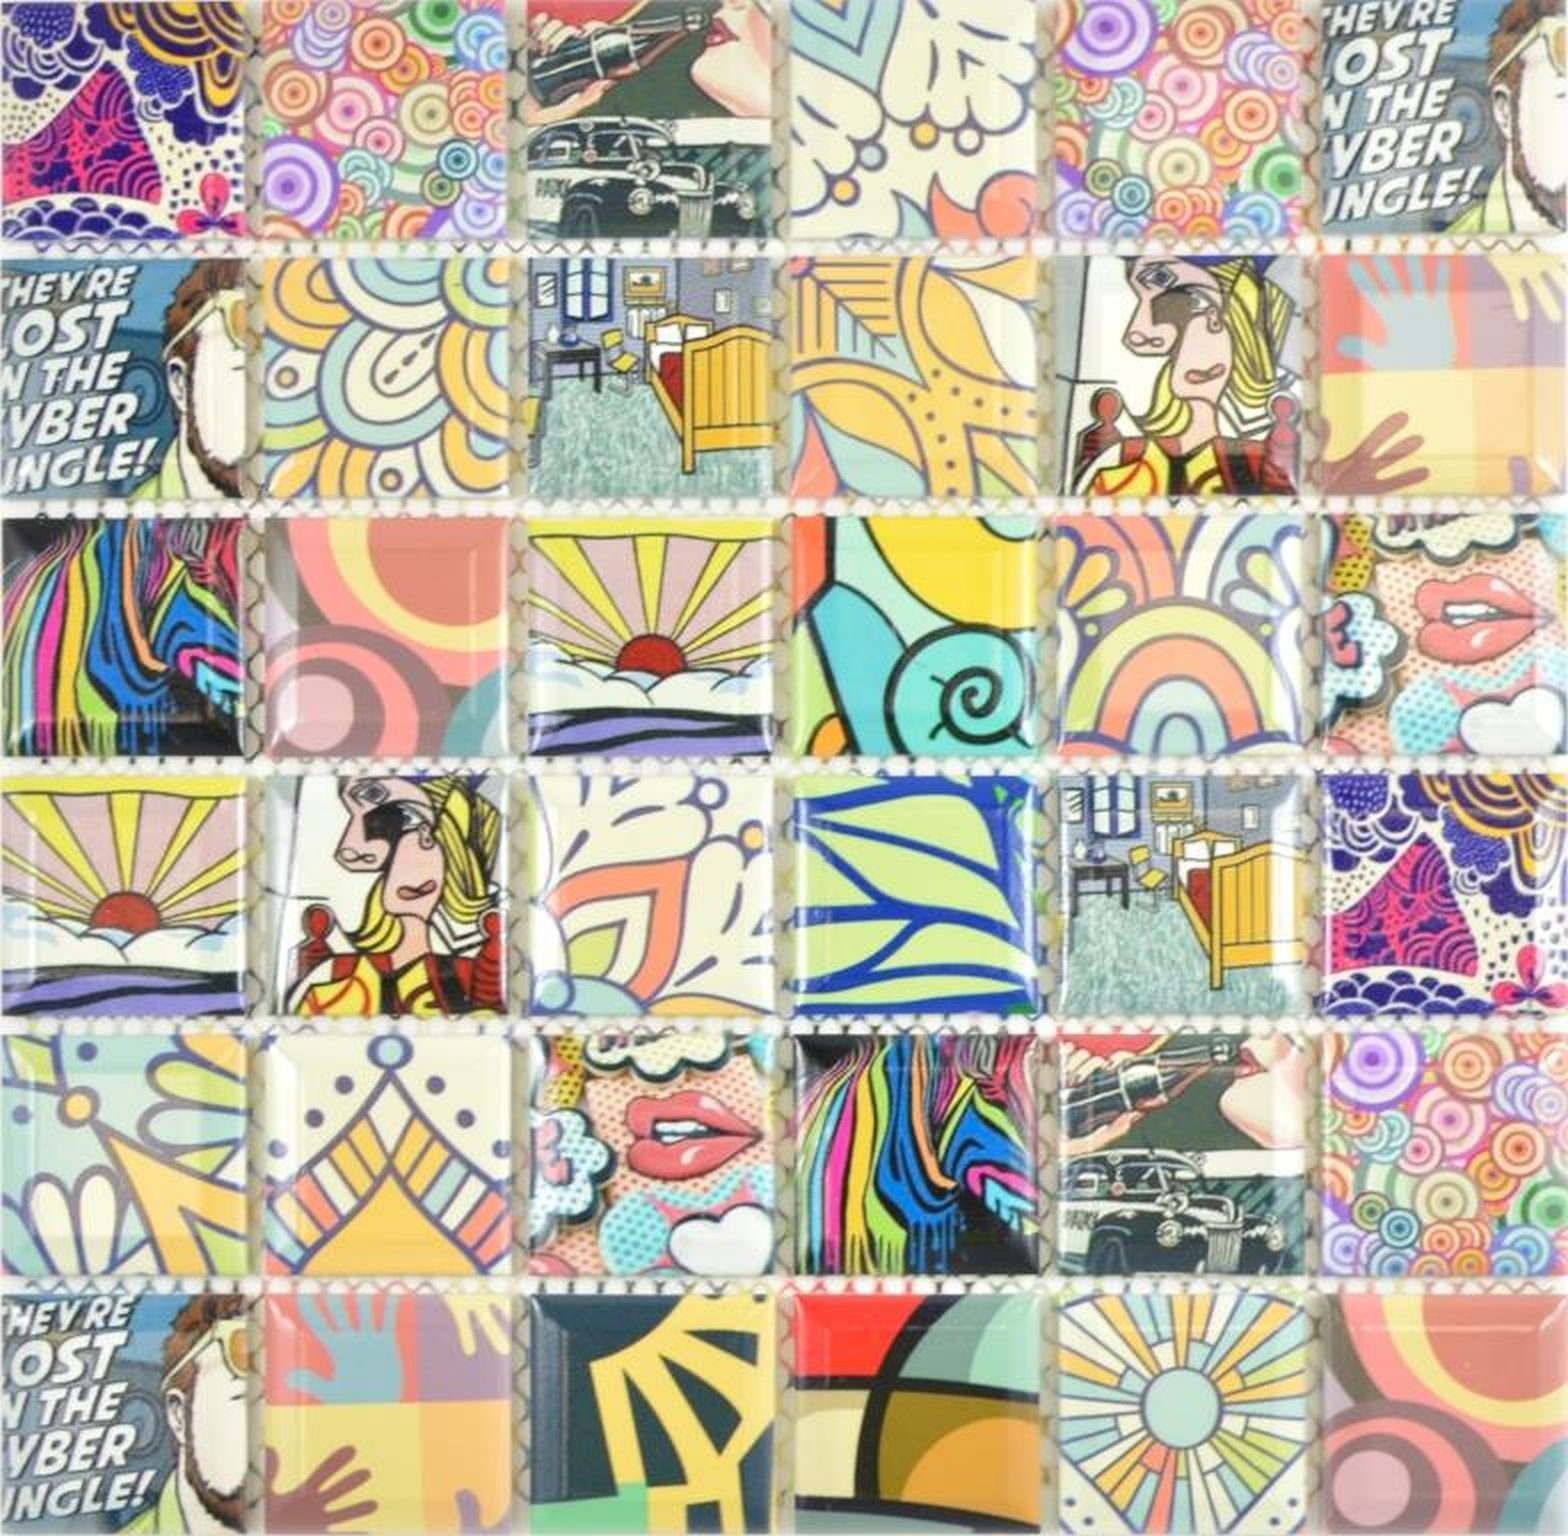 Mosani Mosaikfliesen